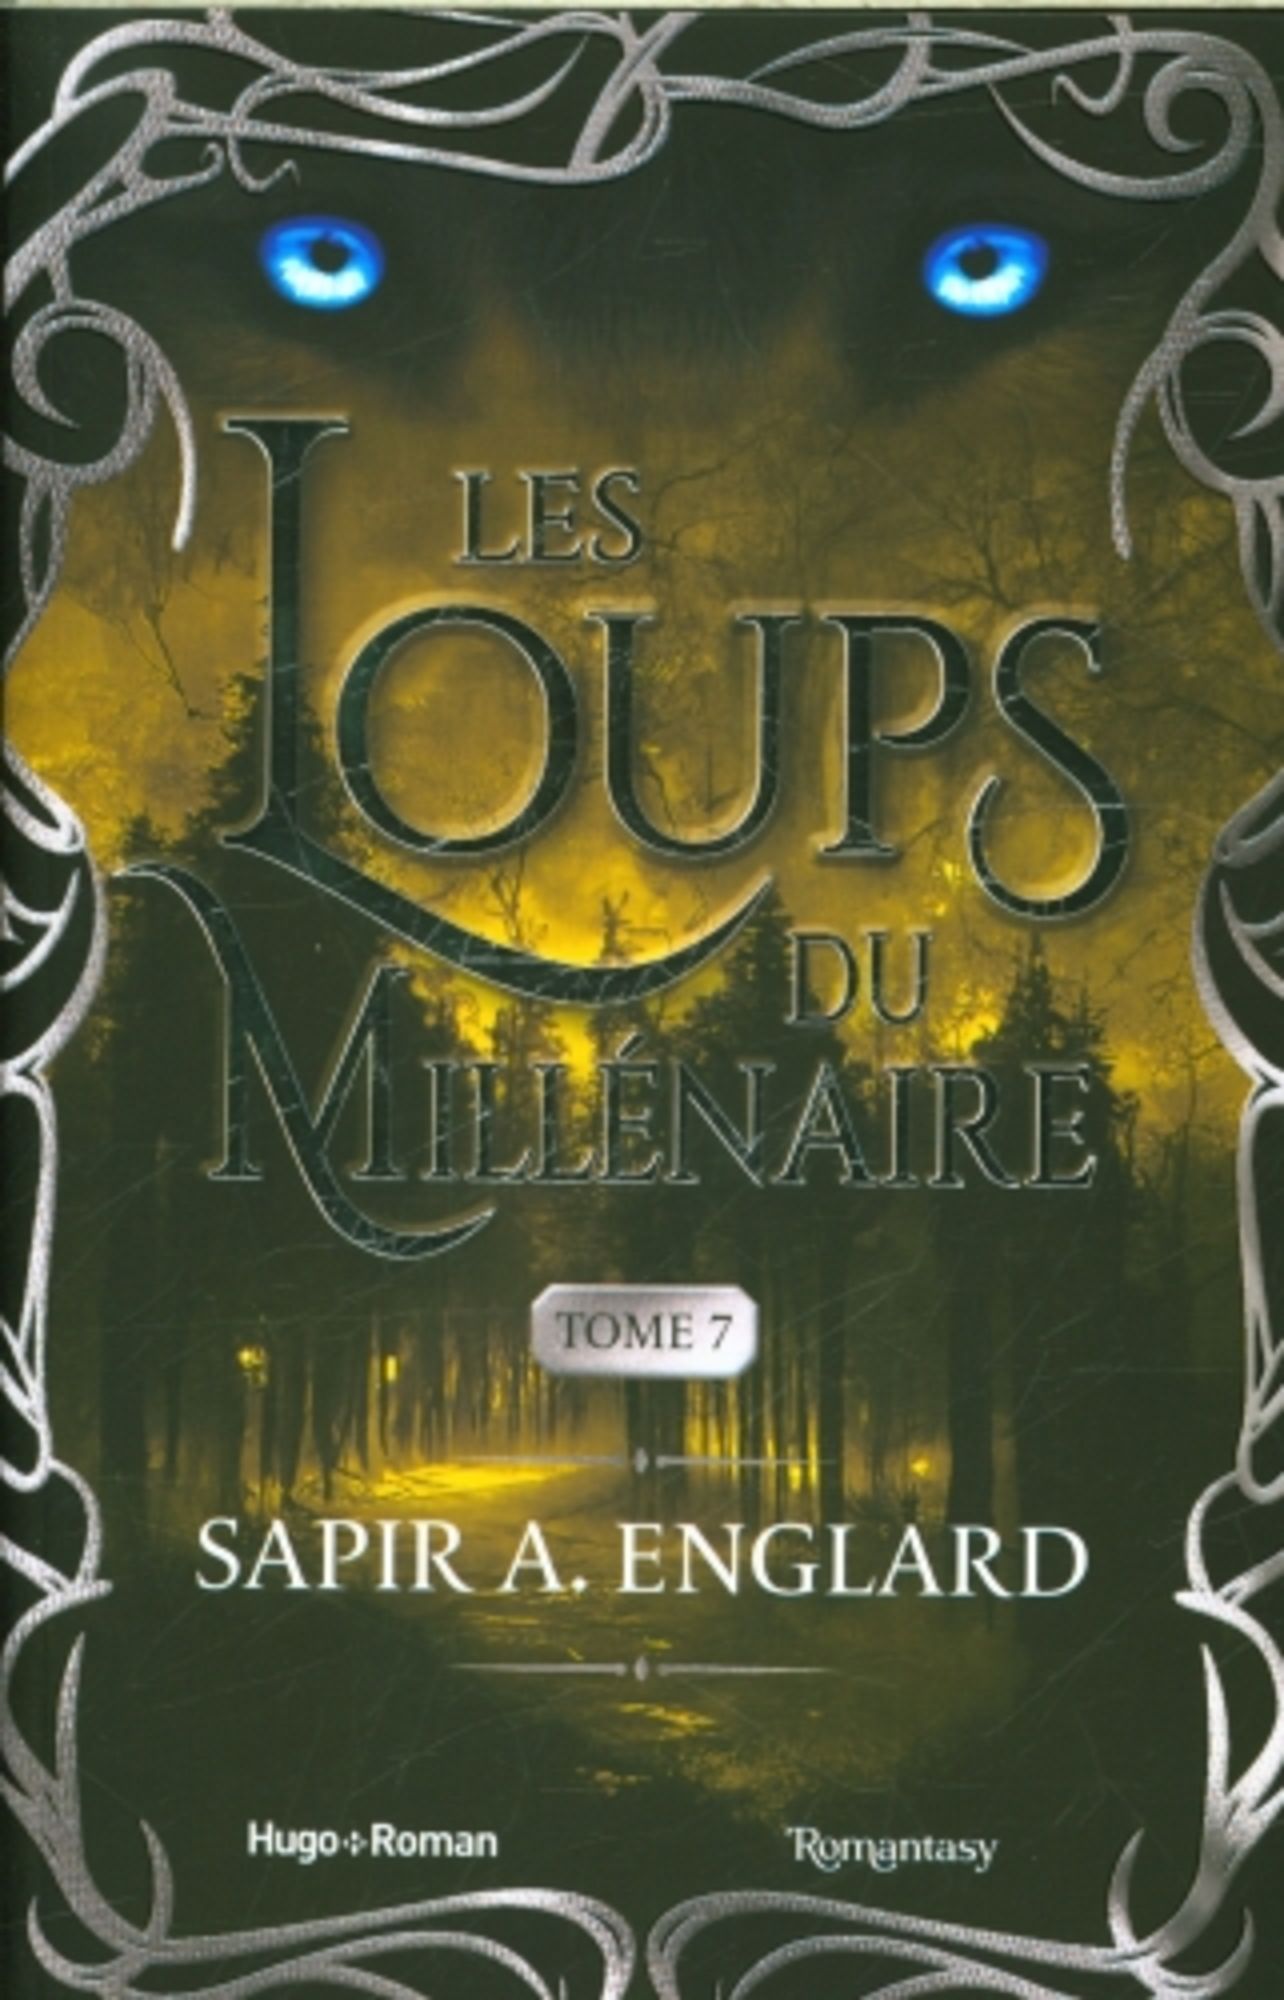 Les Loups du millénaire - Tome 4 by Englard, Sapir A.